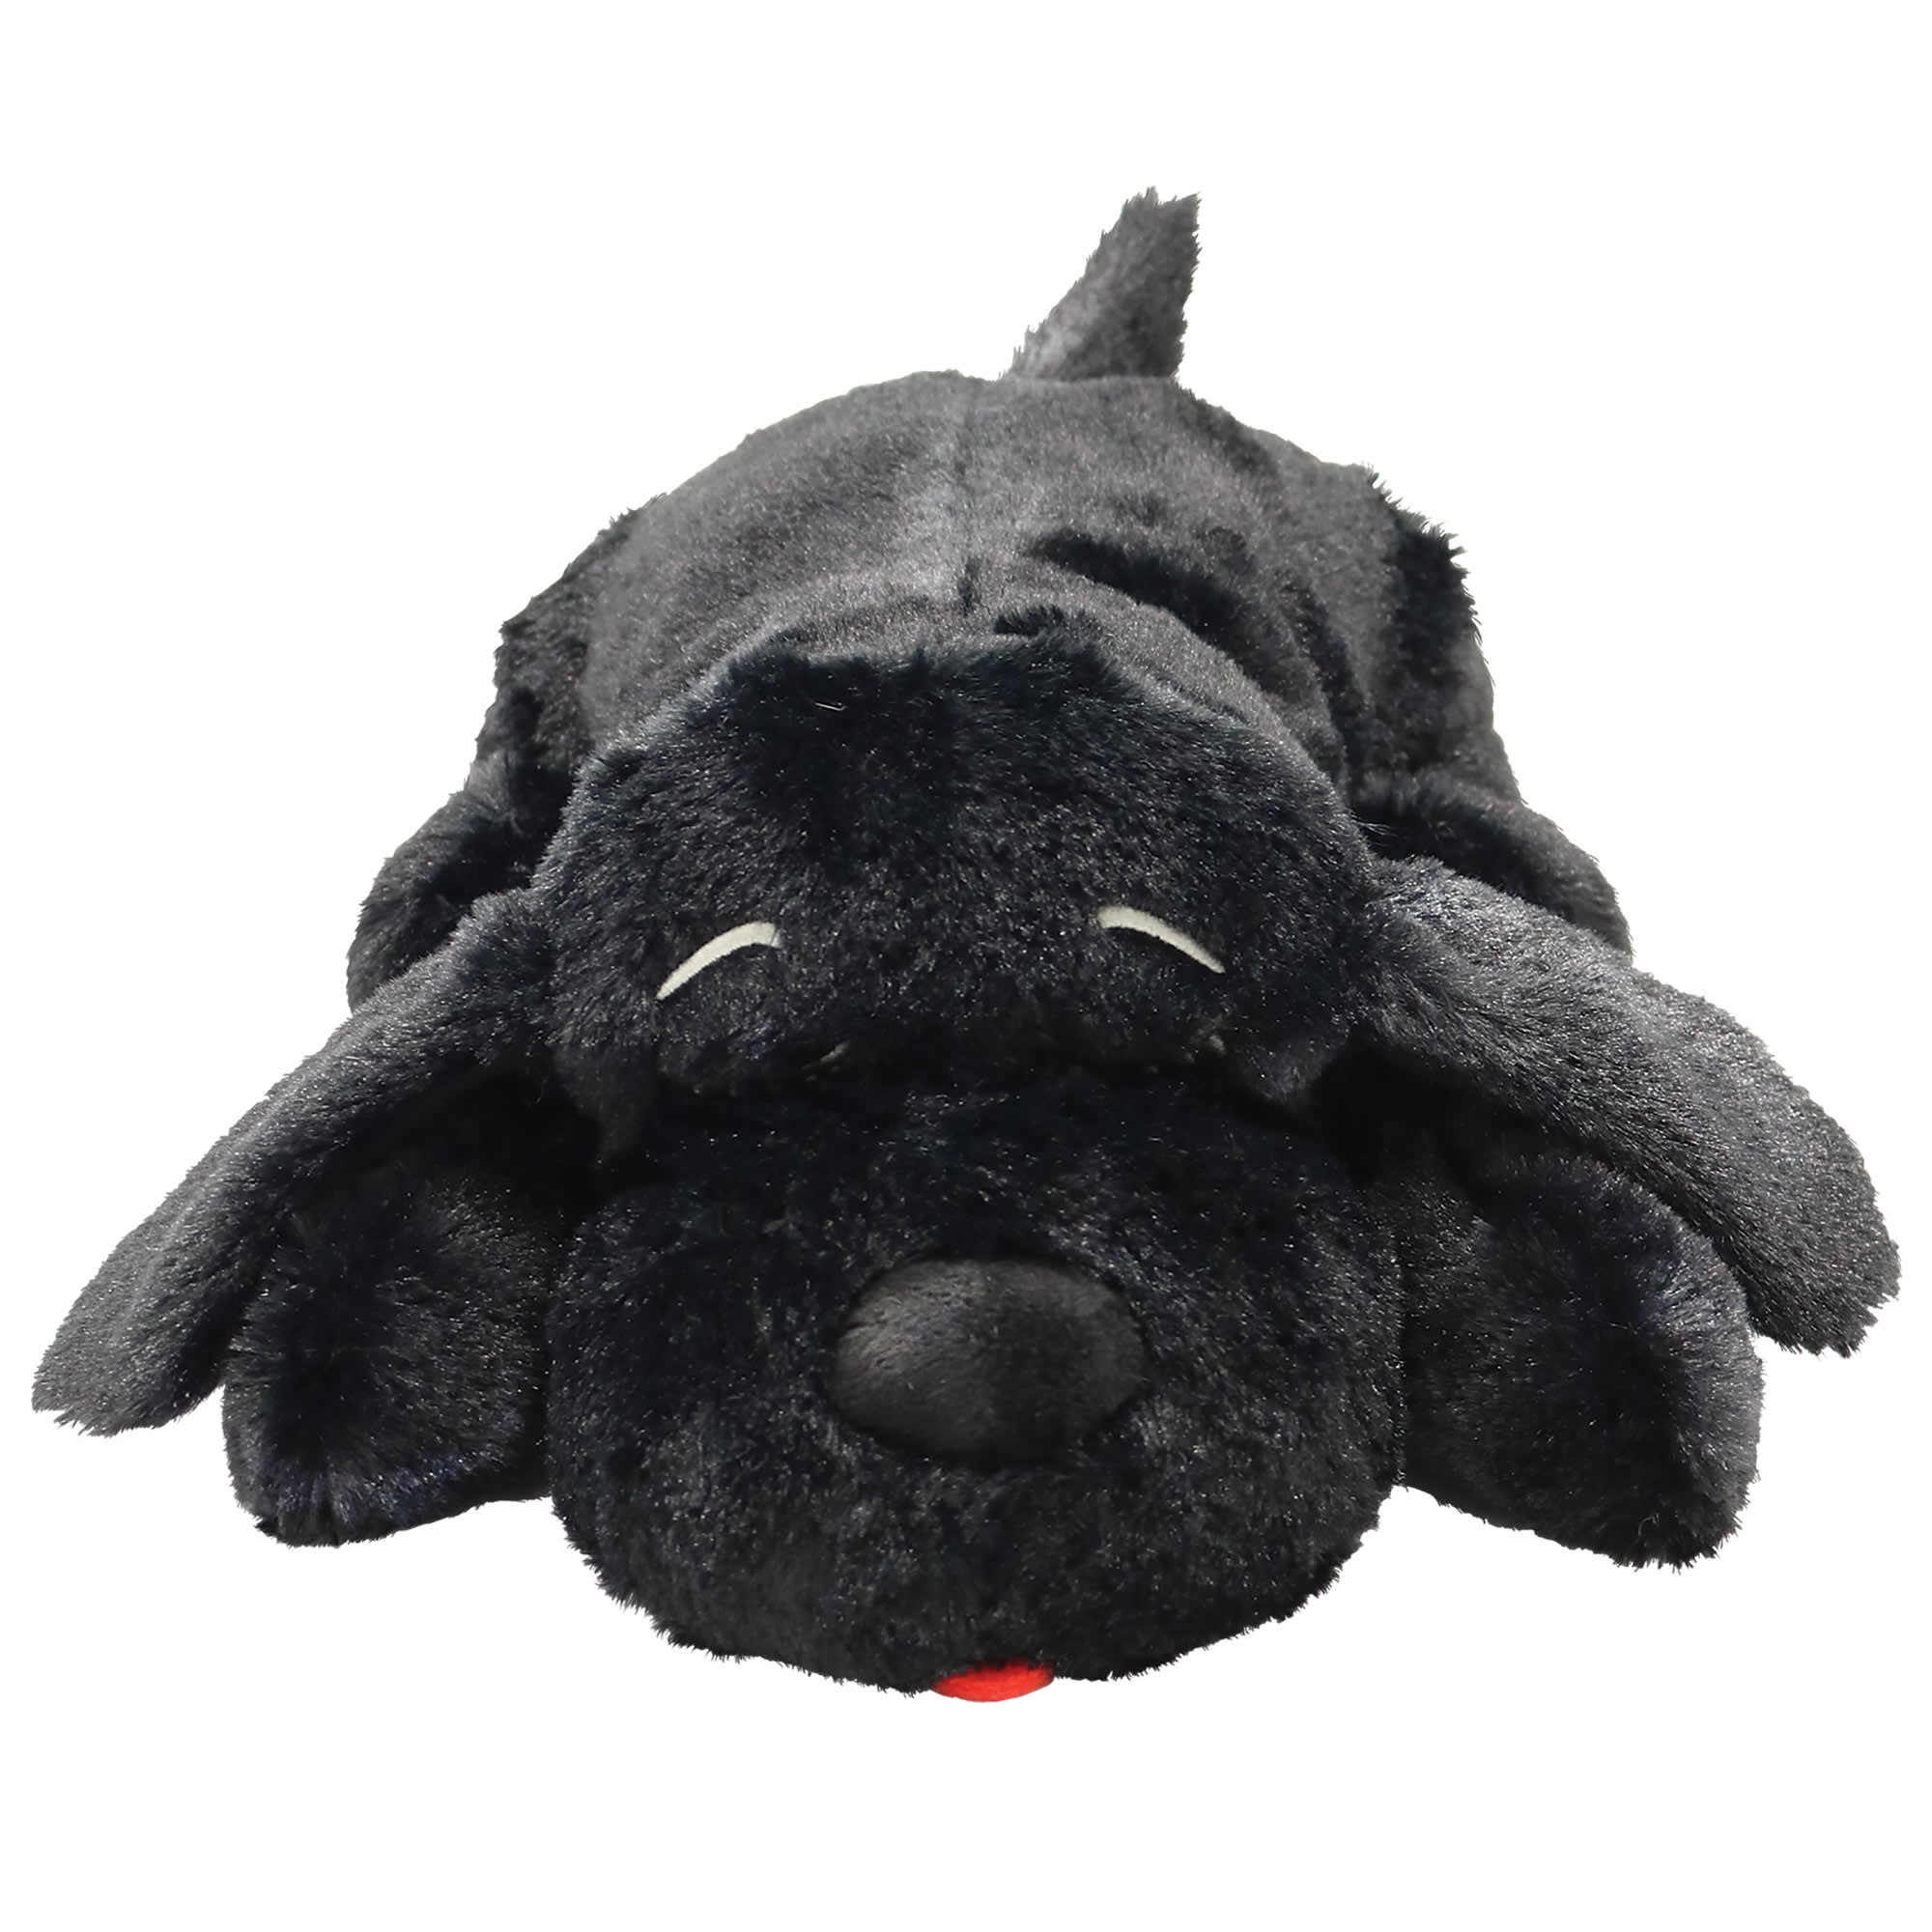 Snuggle Puppy Black Behavi Aid Dog